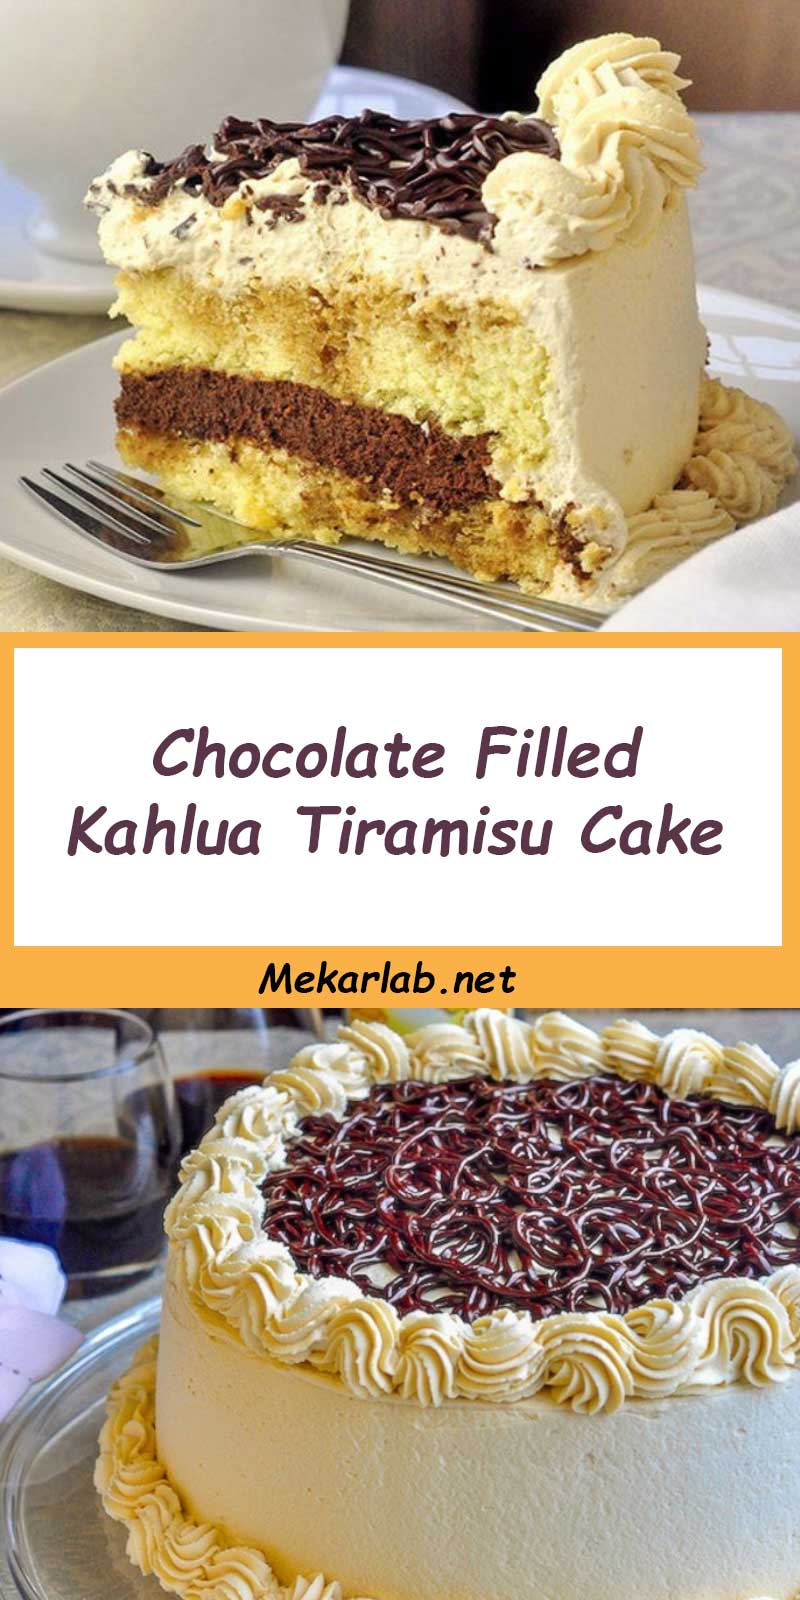 Chocolate Filled Kahlua Tiramisu Cake